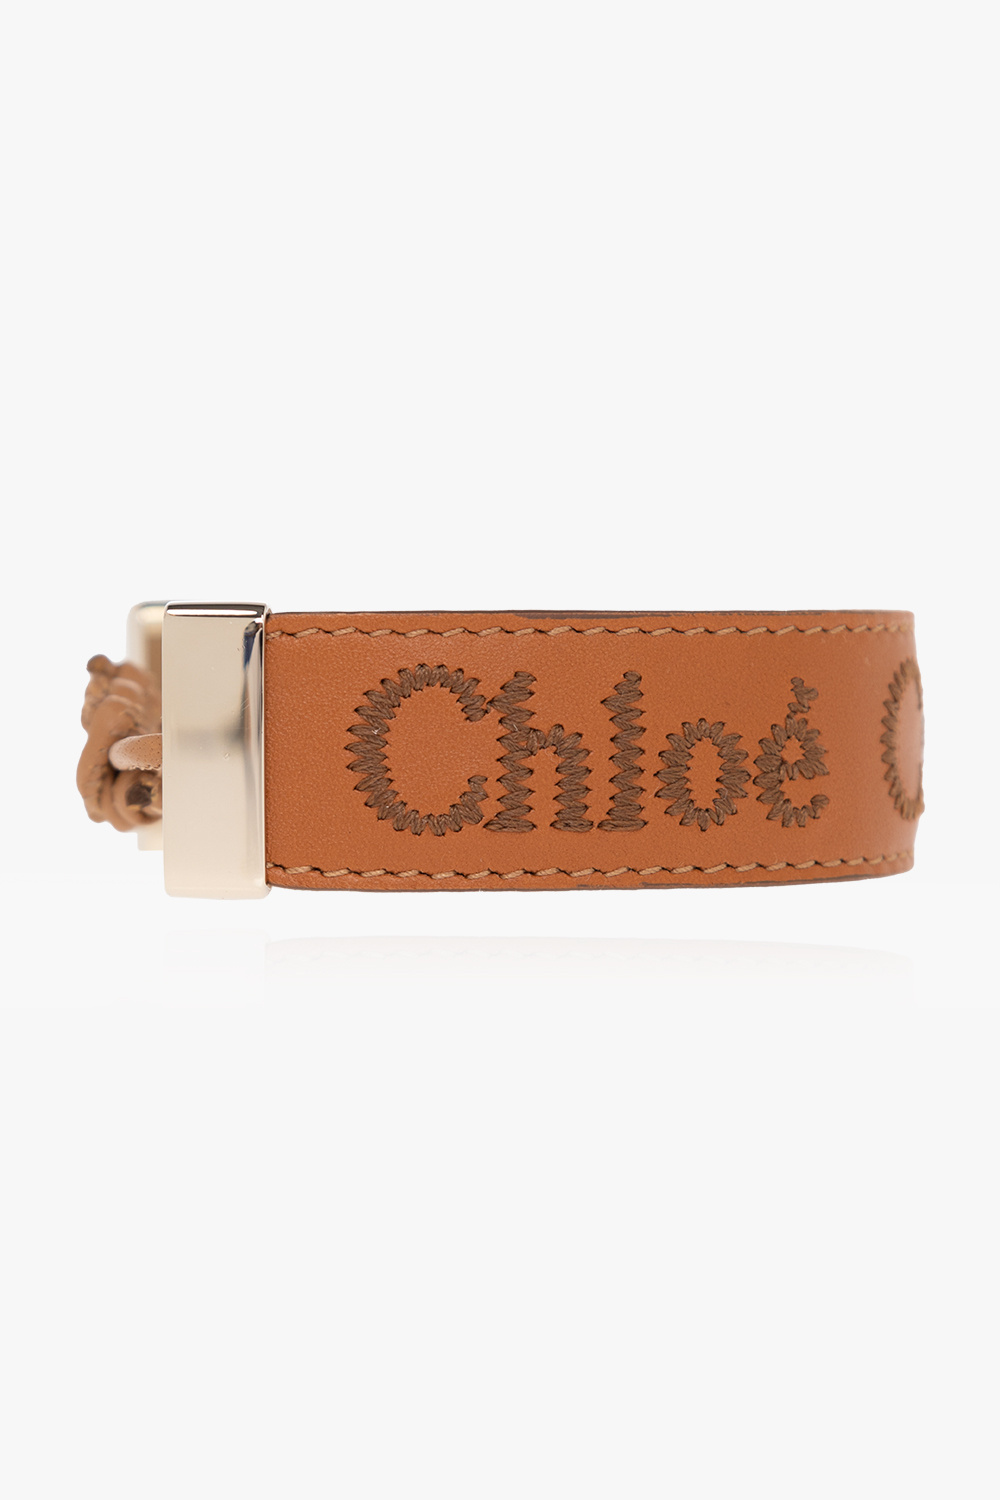 Chloé ‘Woody’ bracelet